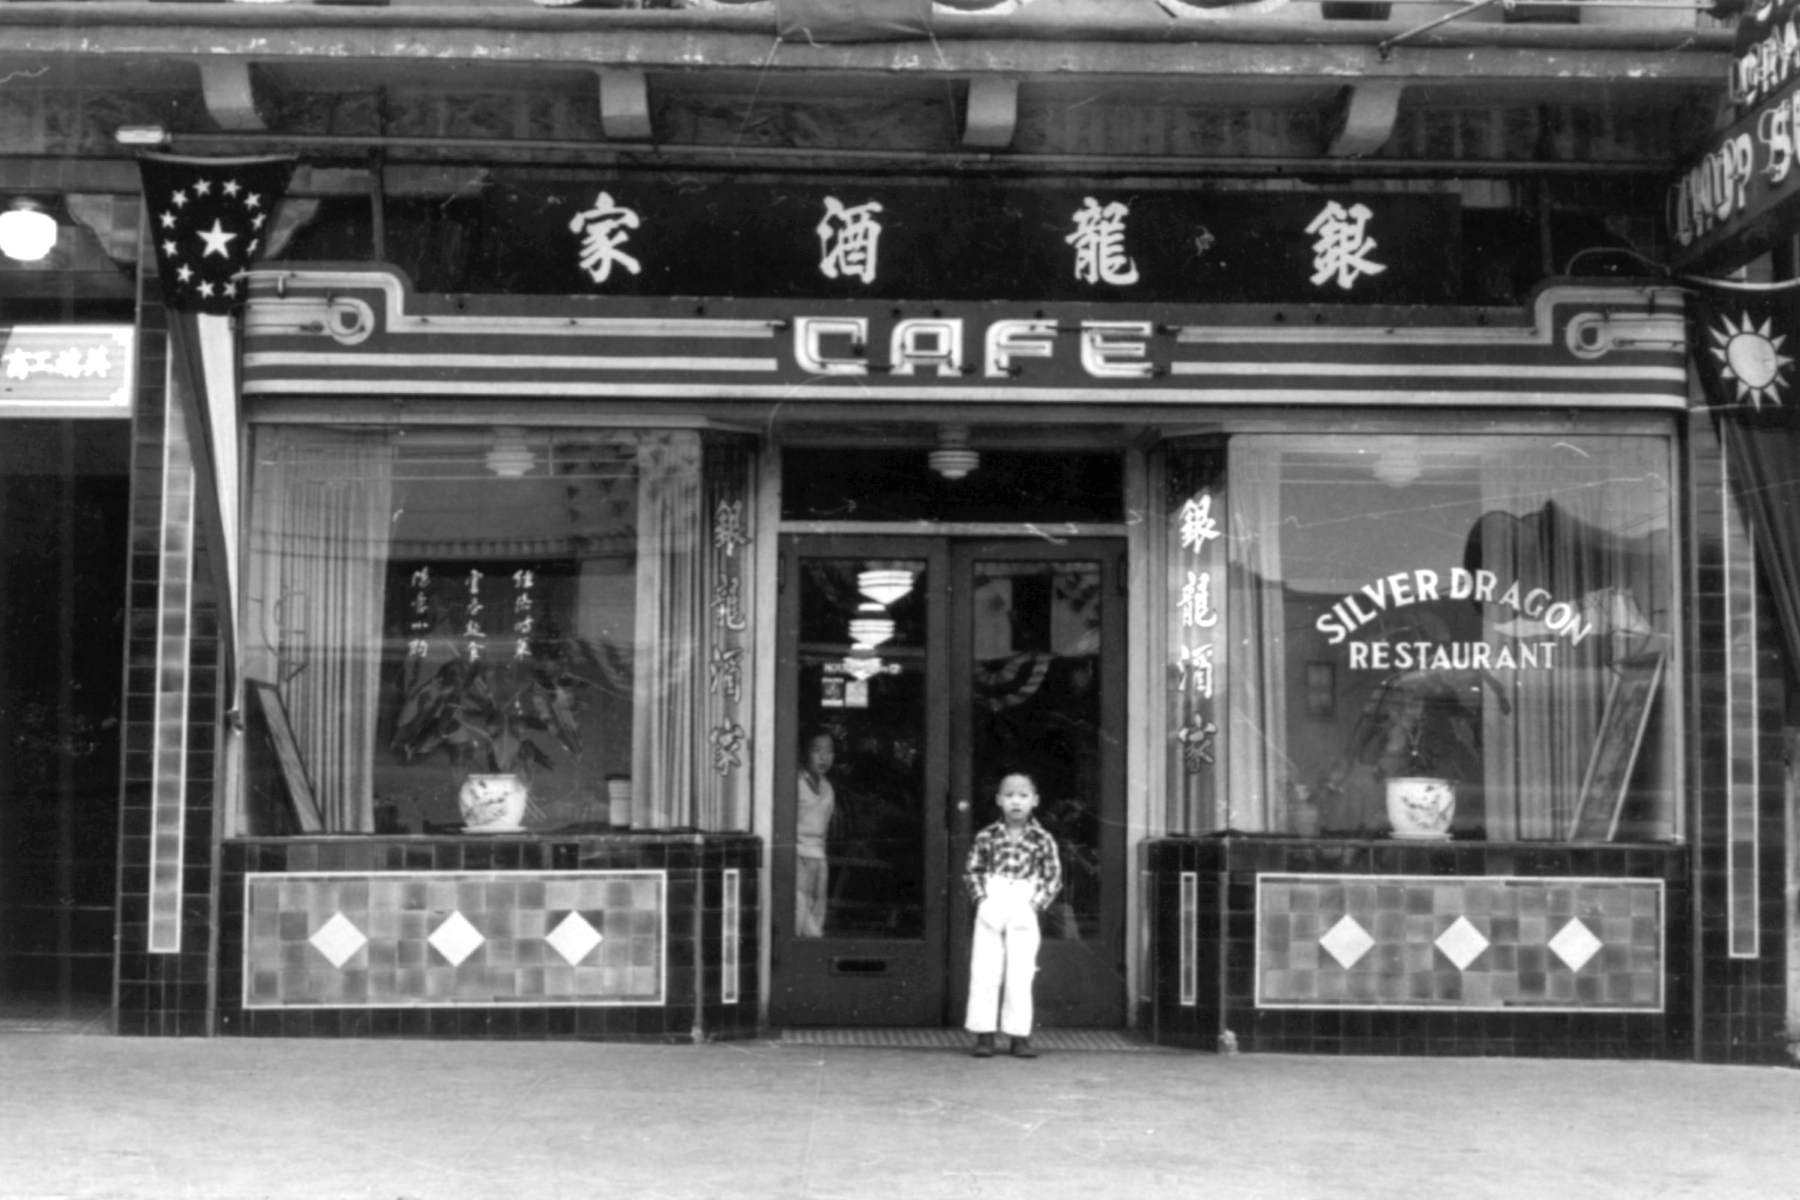 Silver Dragon Restaurant Oakland Chinatown 1955